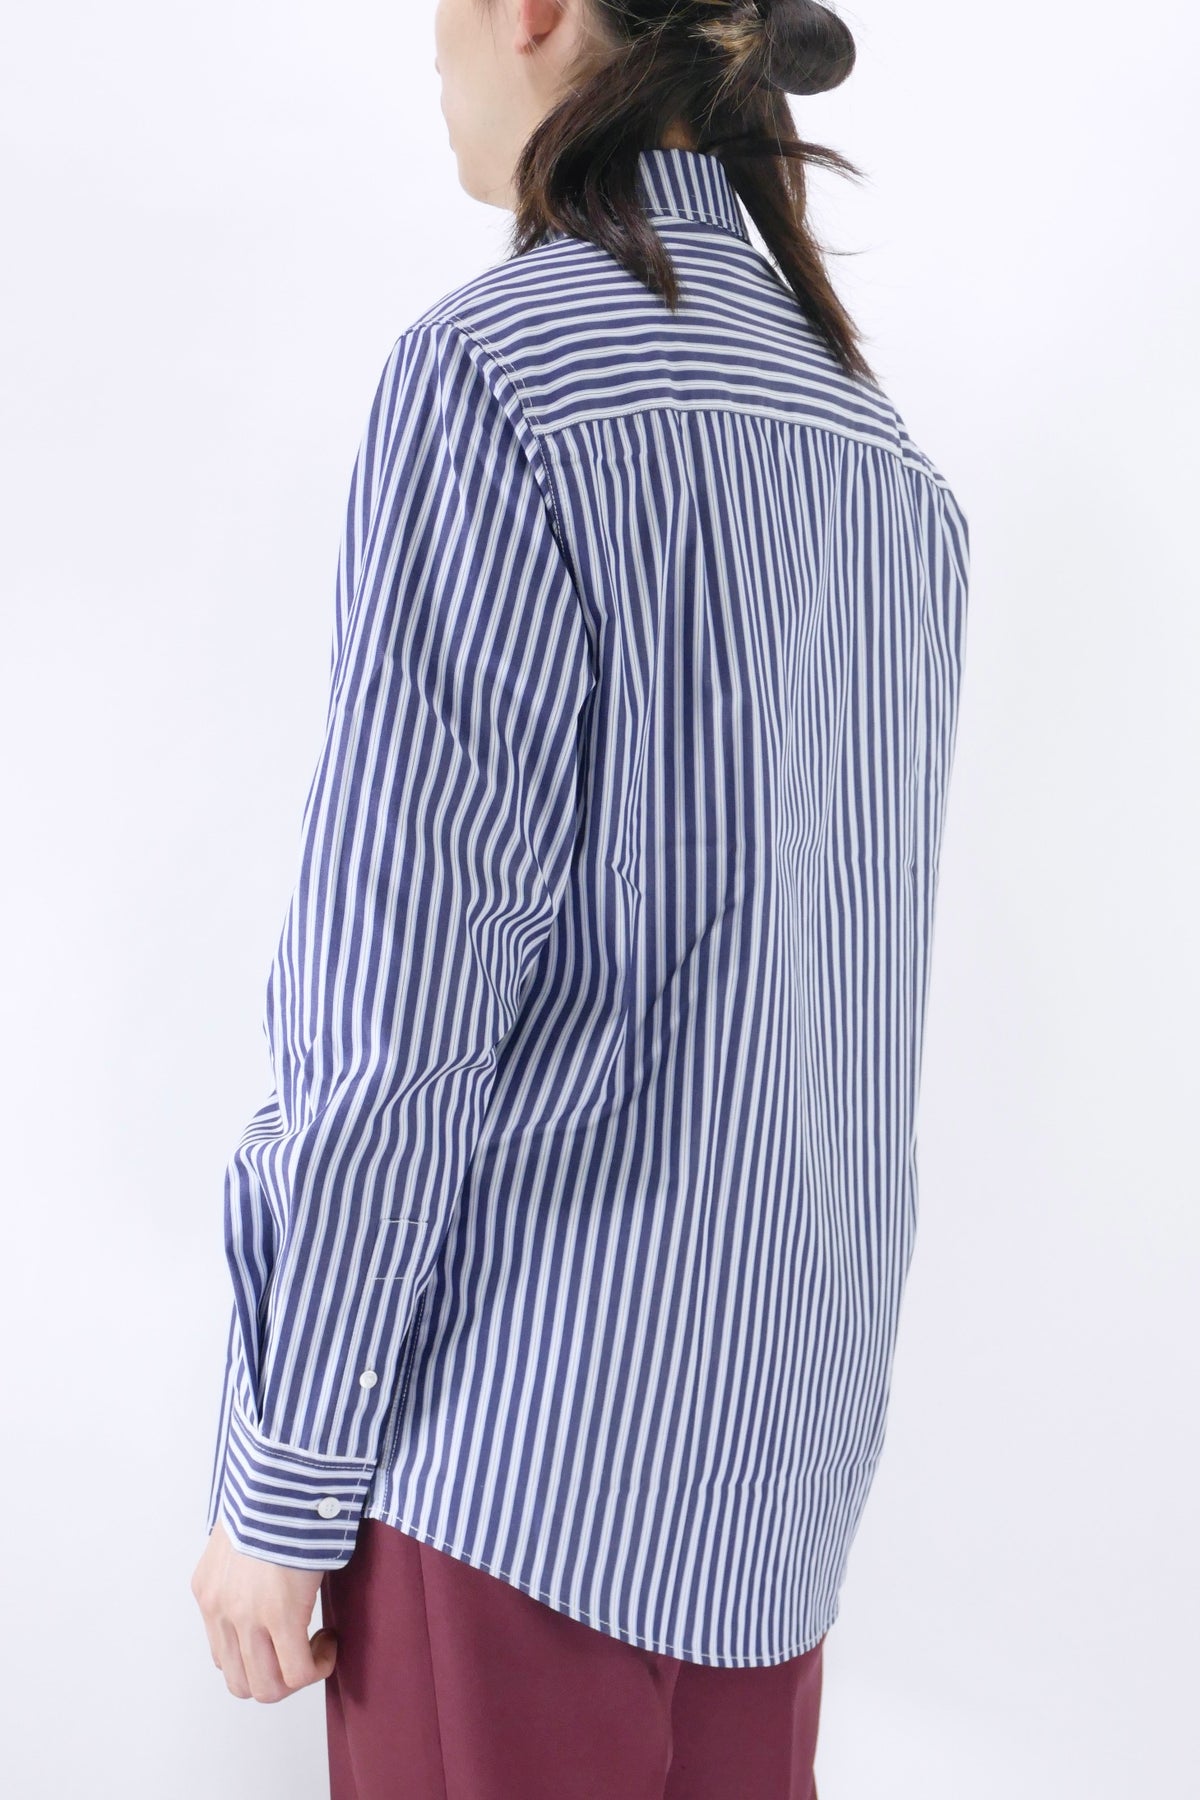 Maison Kitsuné Casual Striped Shirt - Navy/White